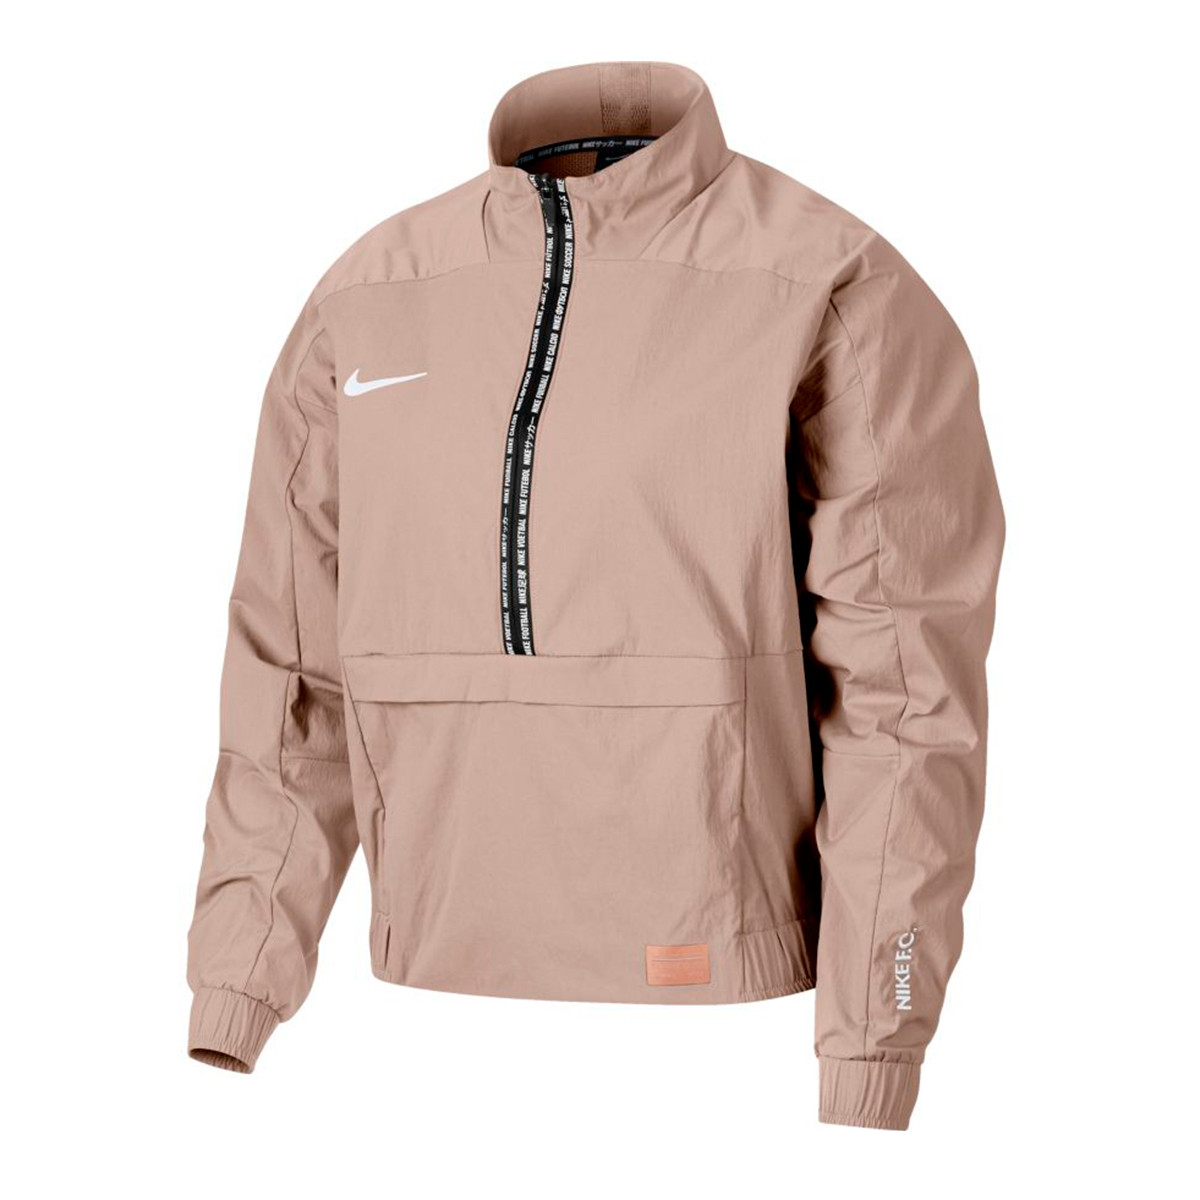 chaquetas nike Nike online – Compra productos Nike baratos